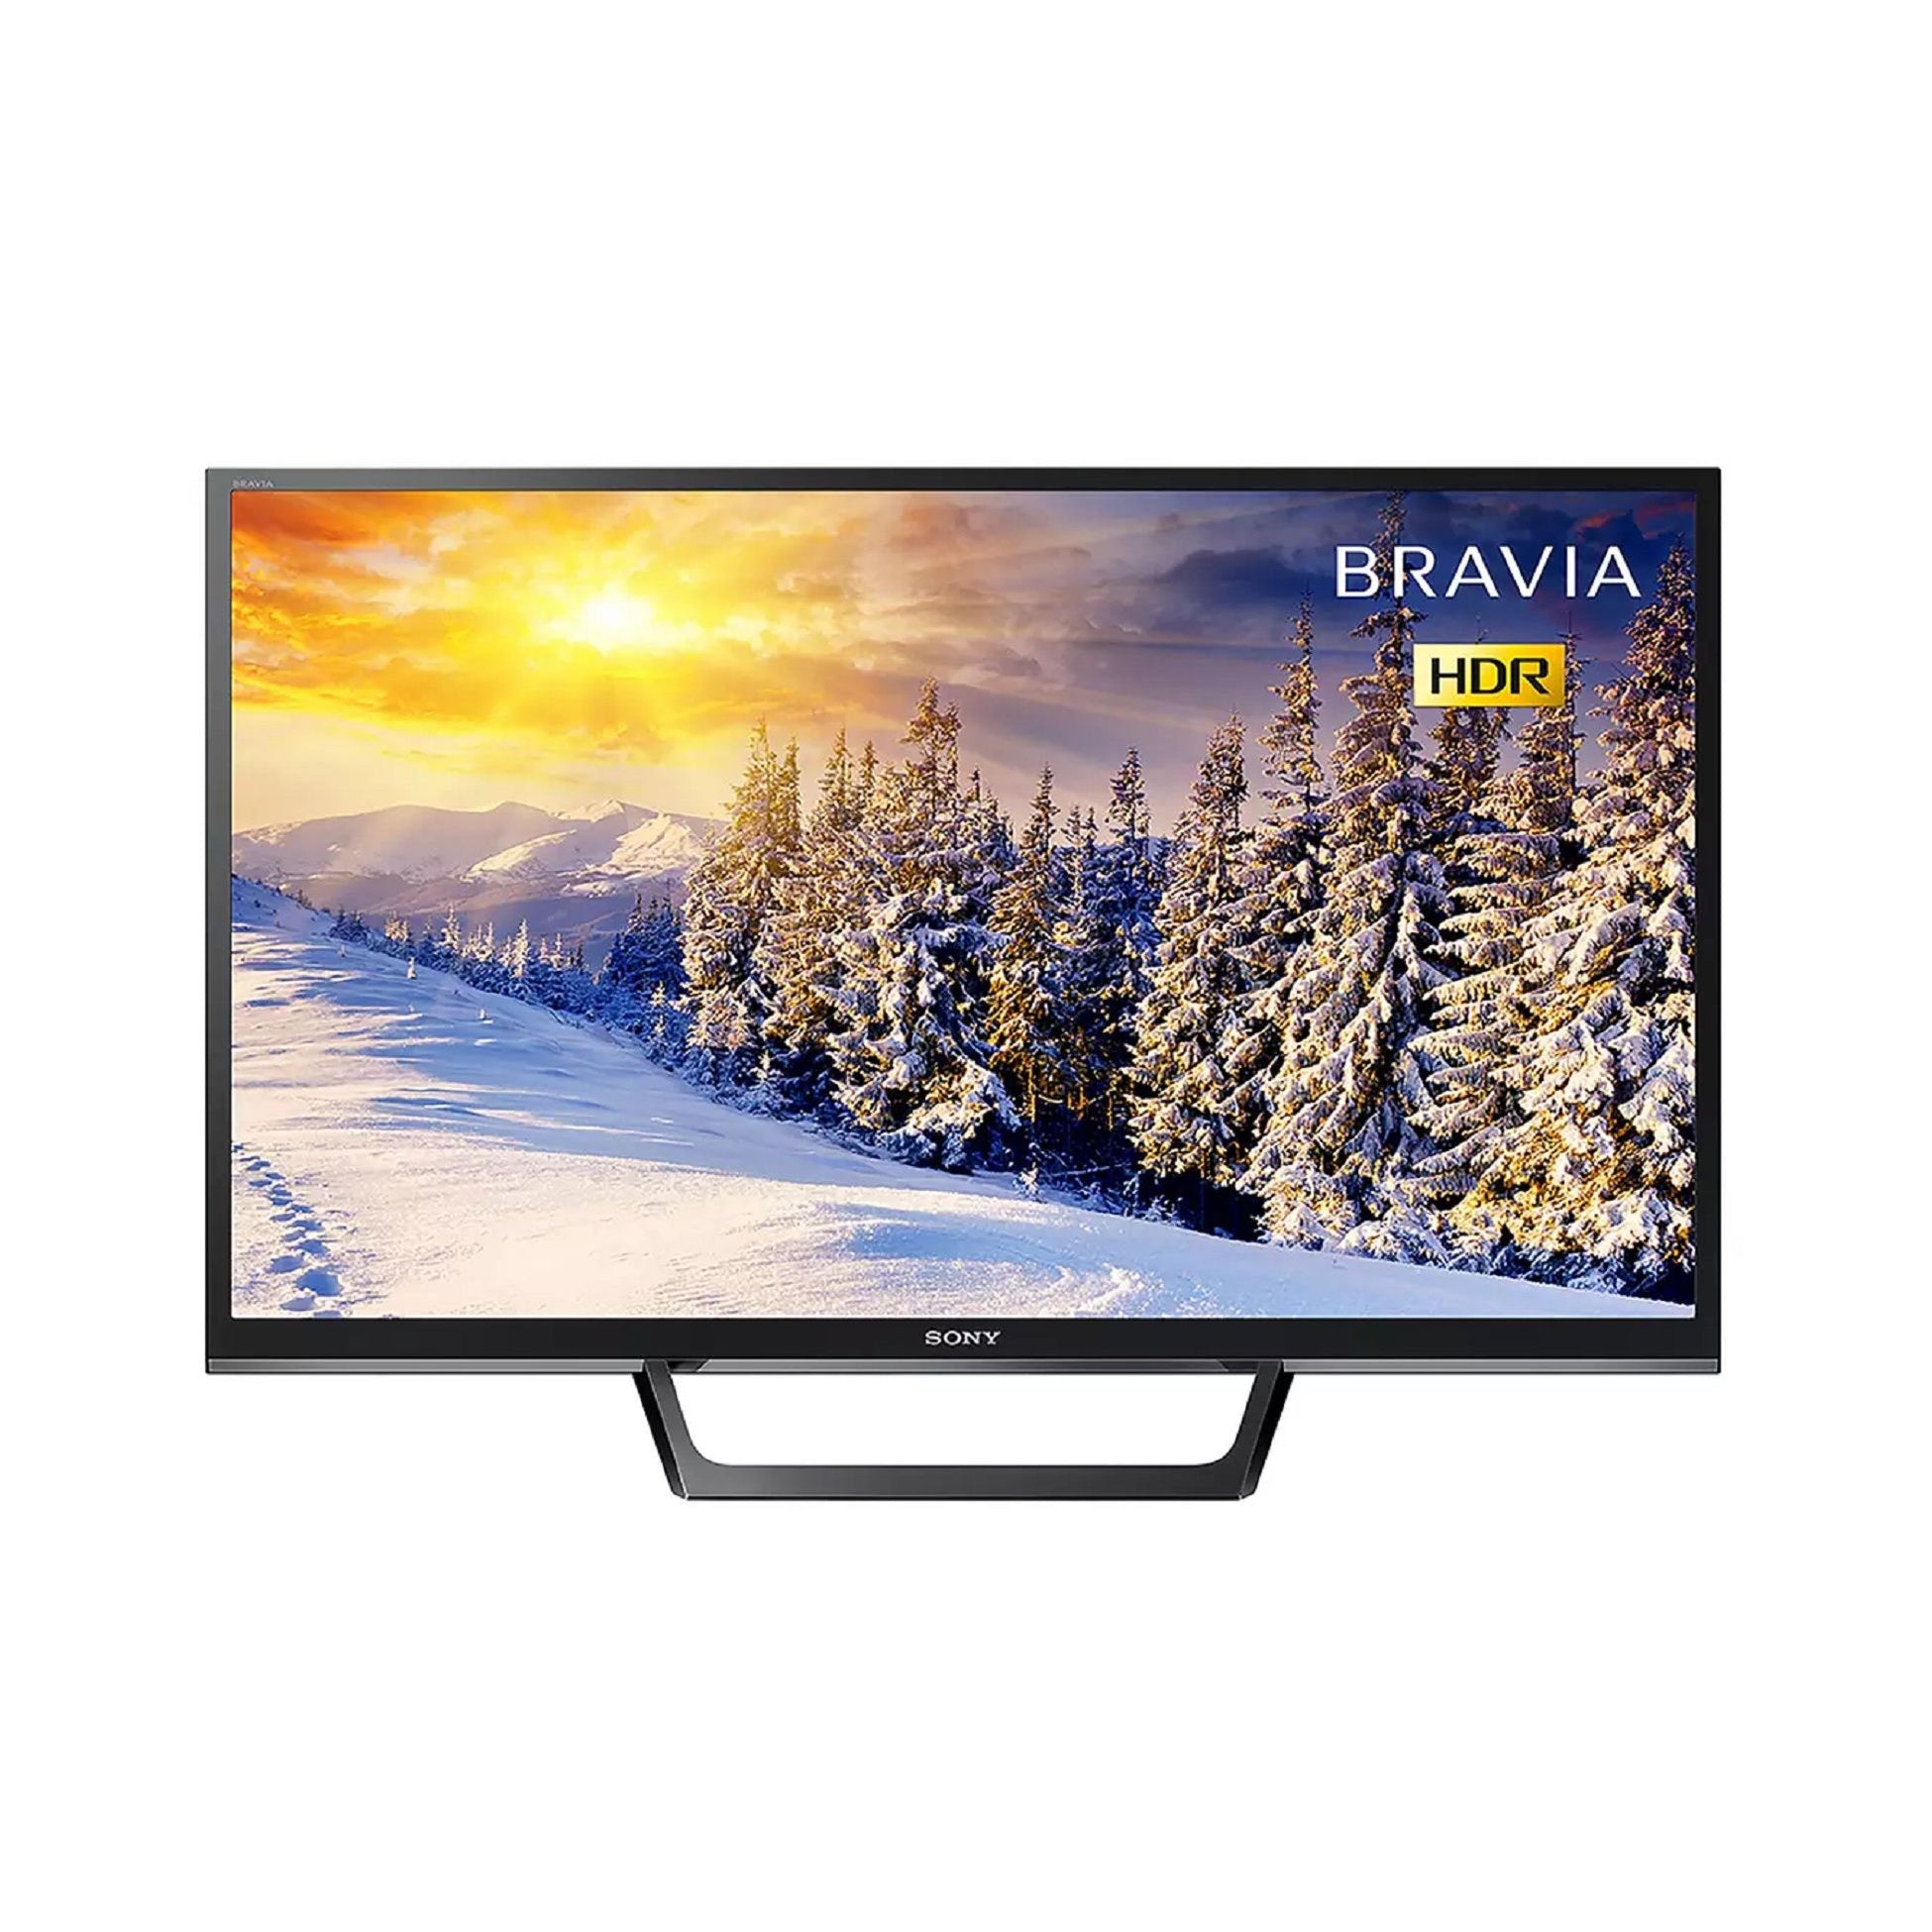 Sony Bravia KDL32WE613 32 inch HDR Smart LED TV HD Ready